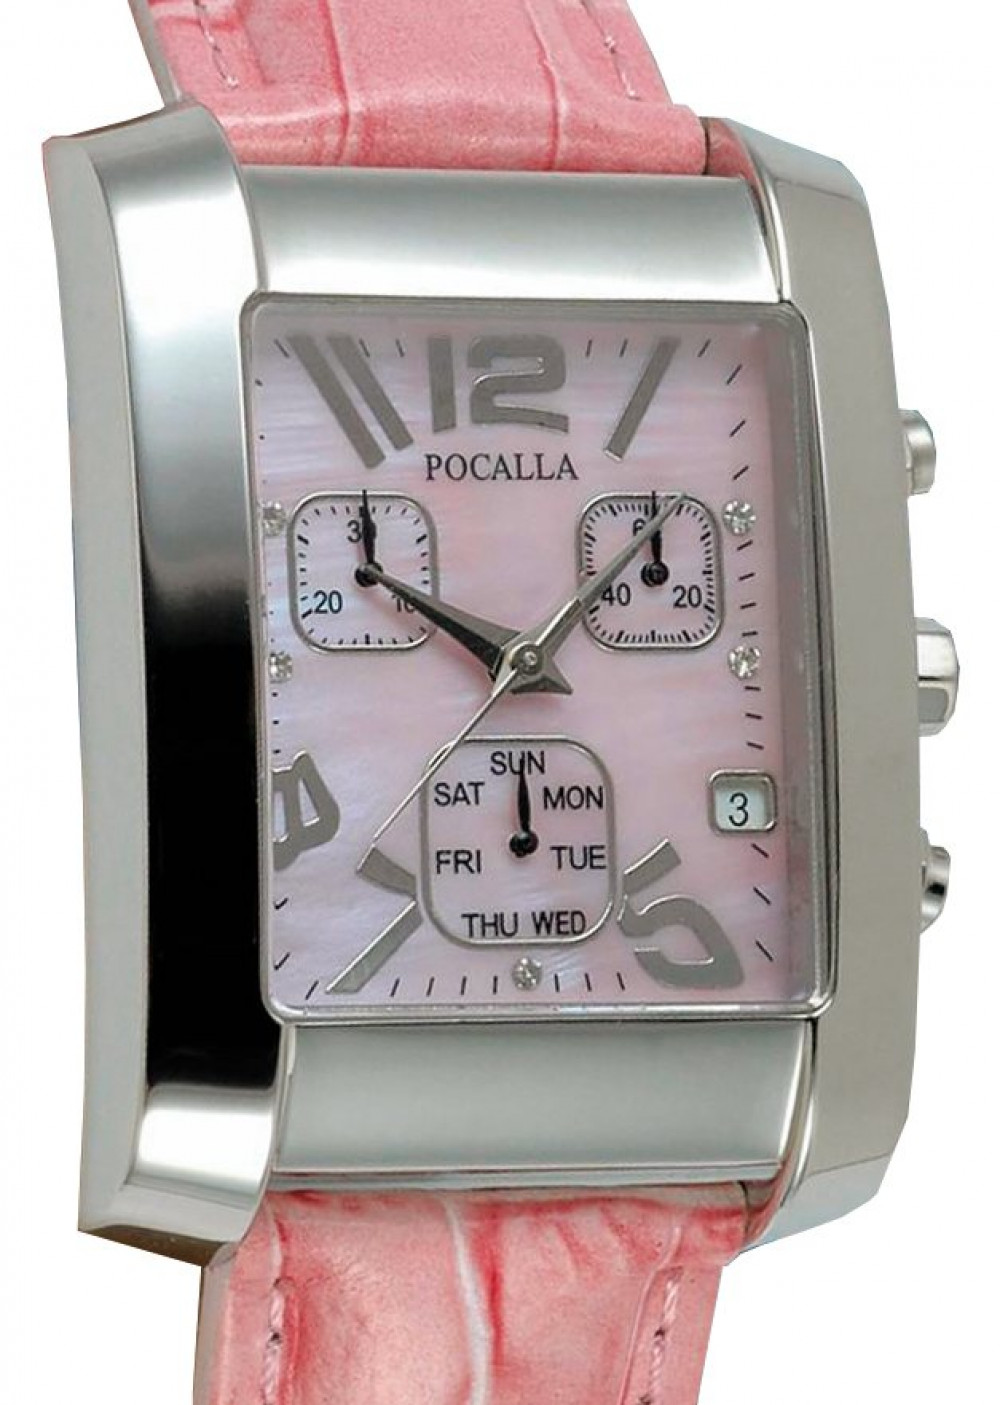 Zegarek firmy Pocalla, model Chronograph